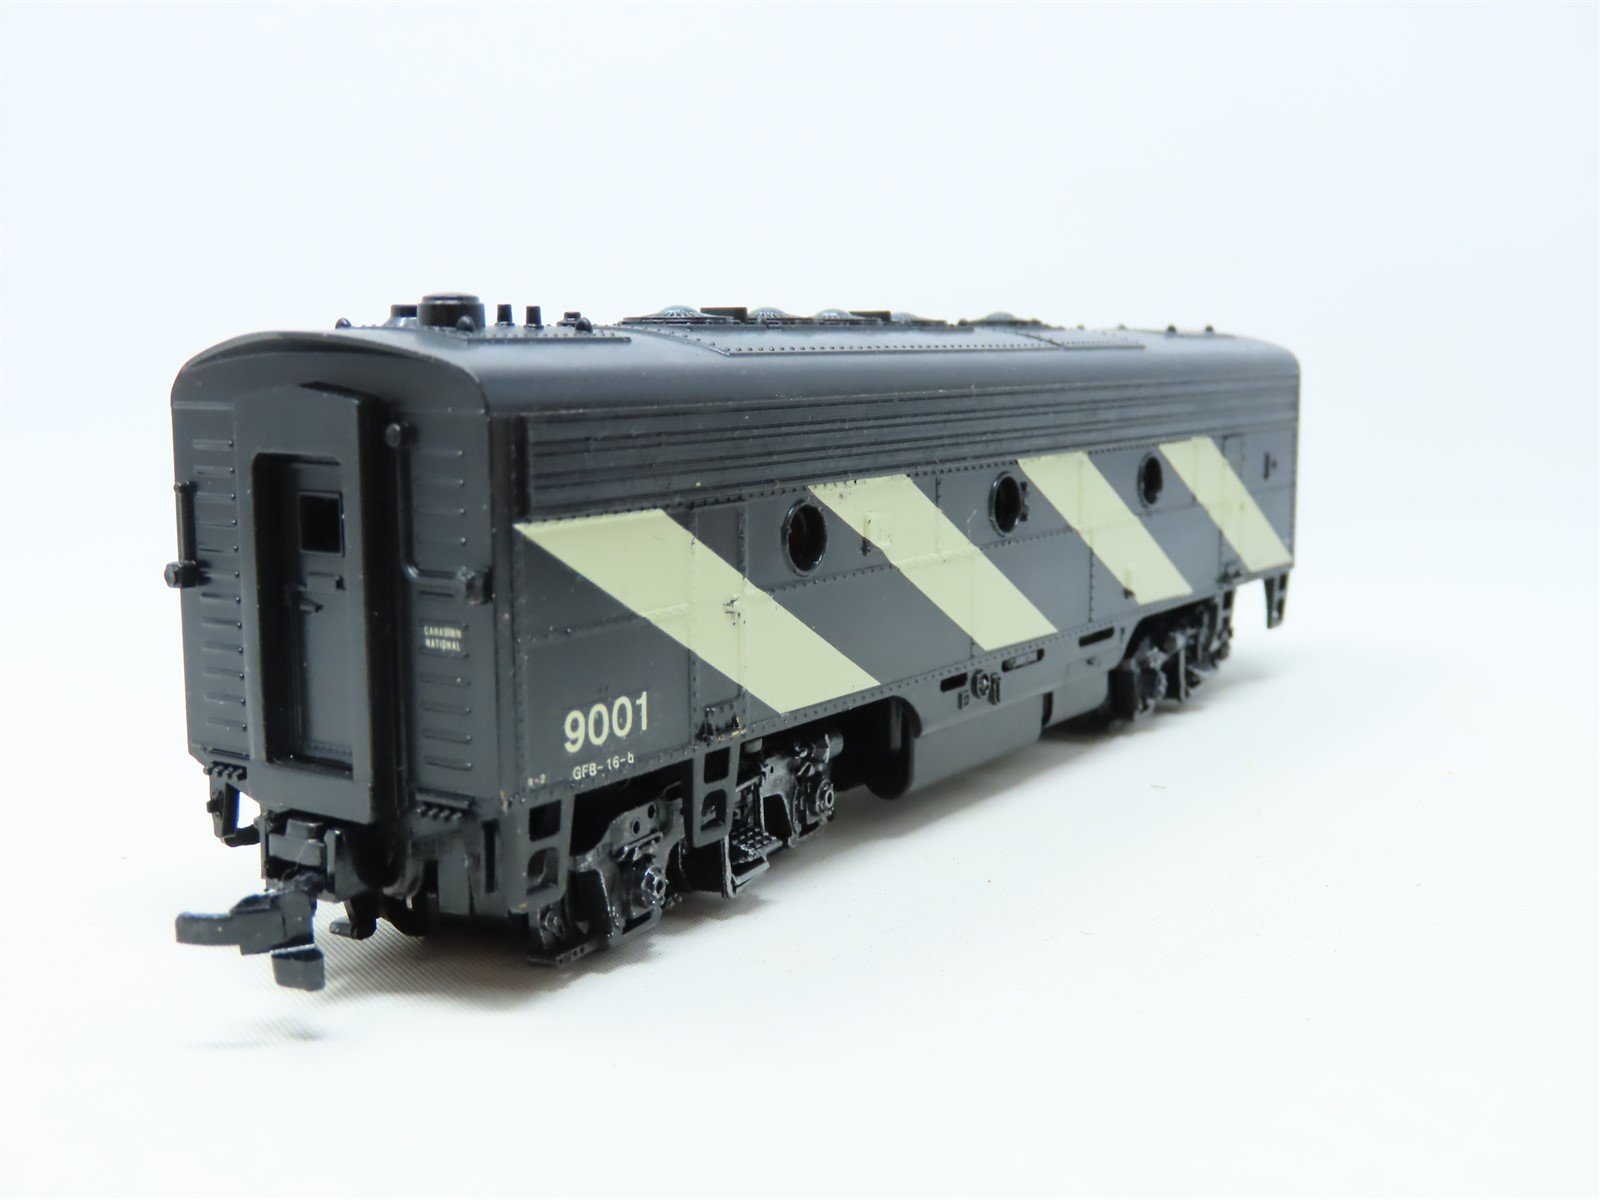 Athearn Genesis 30635 - EMD GP18 Grand Trunk Western (GTW) 4707 - HO Scale  - Midwest Model Railroad